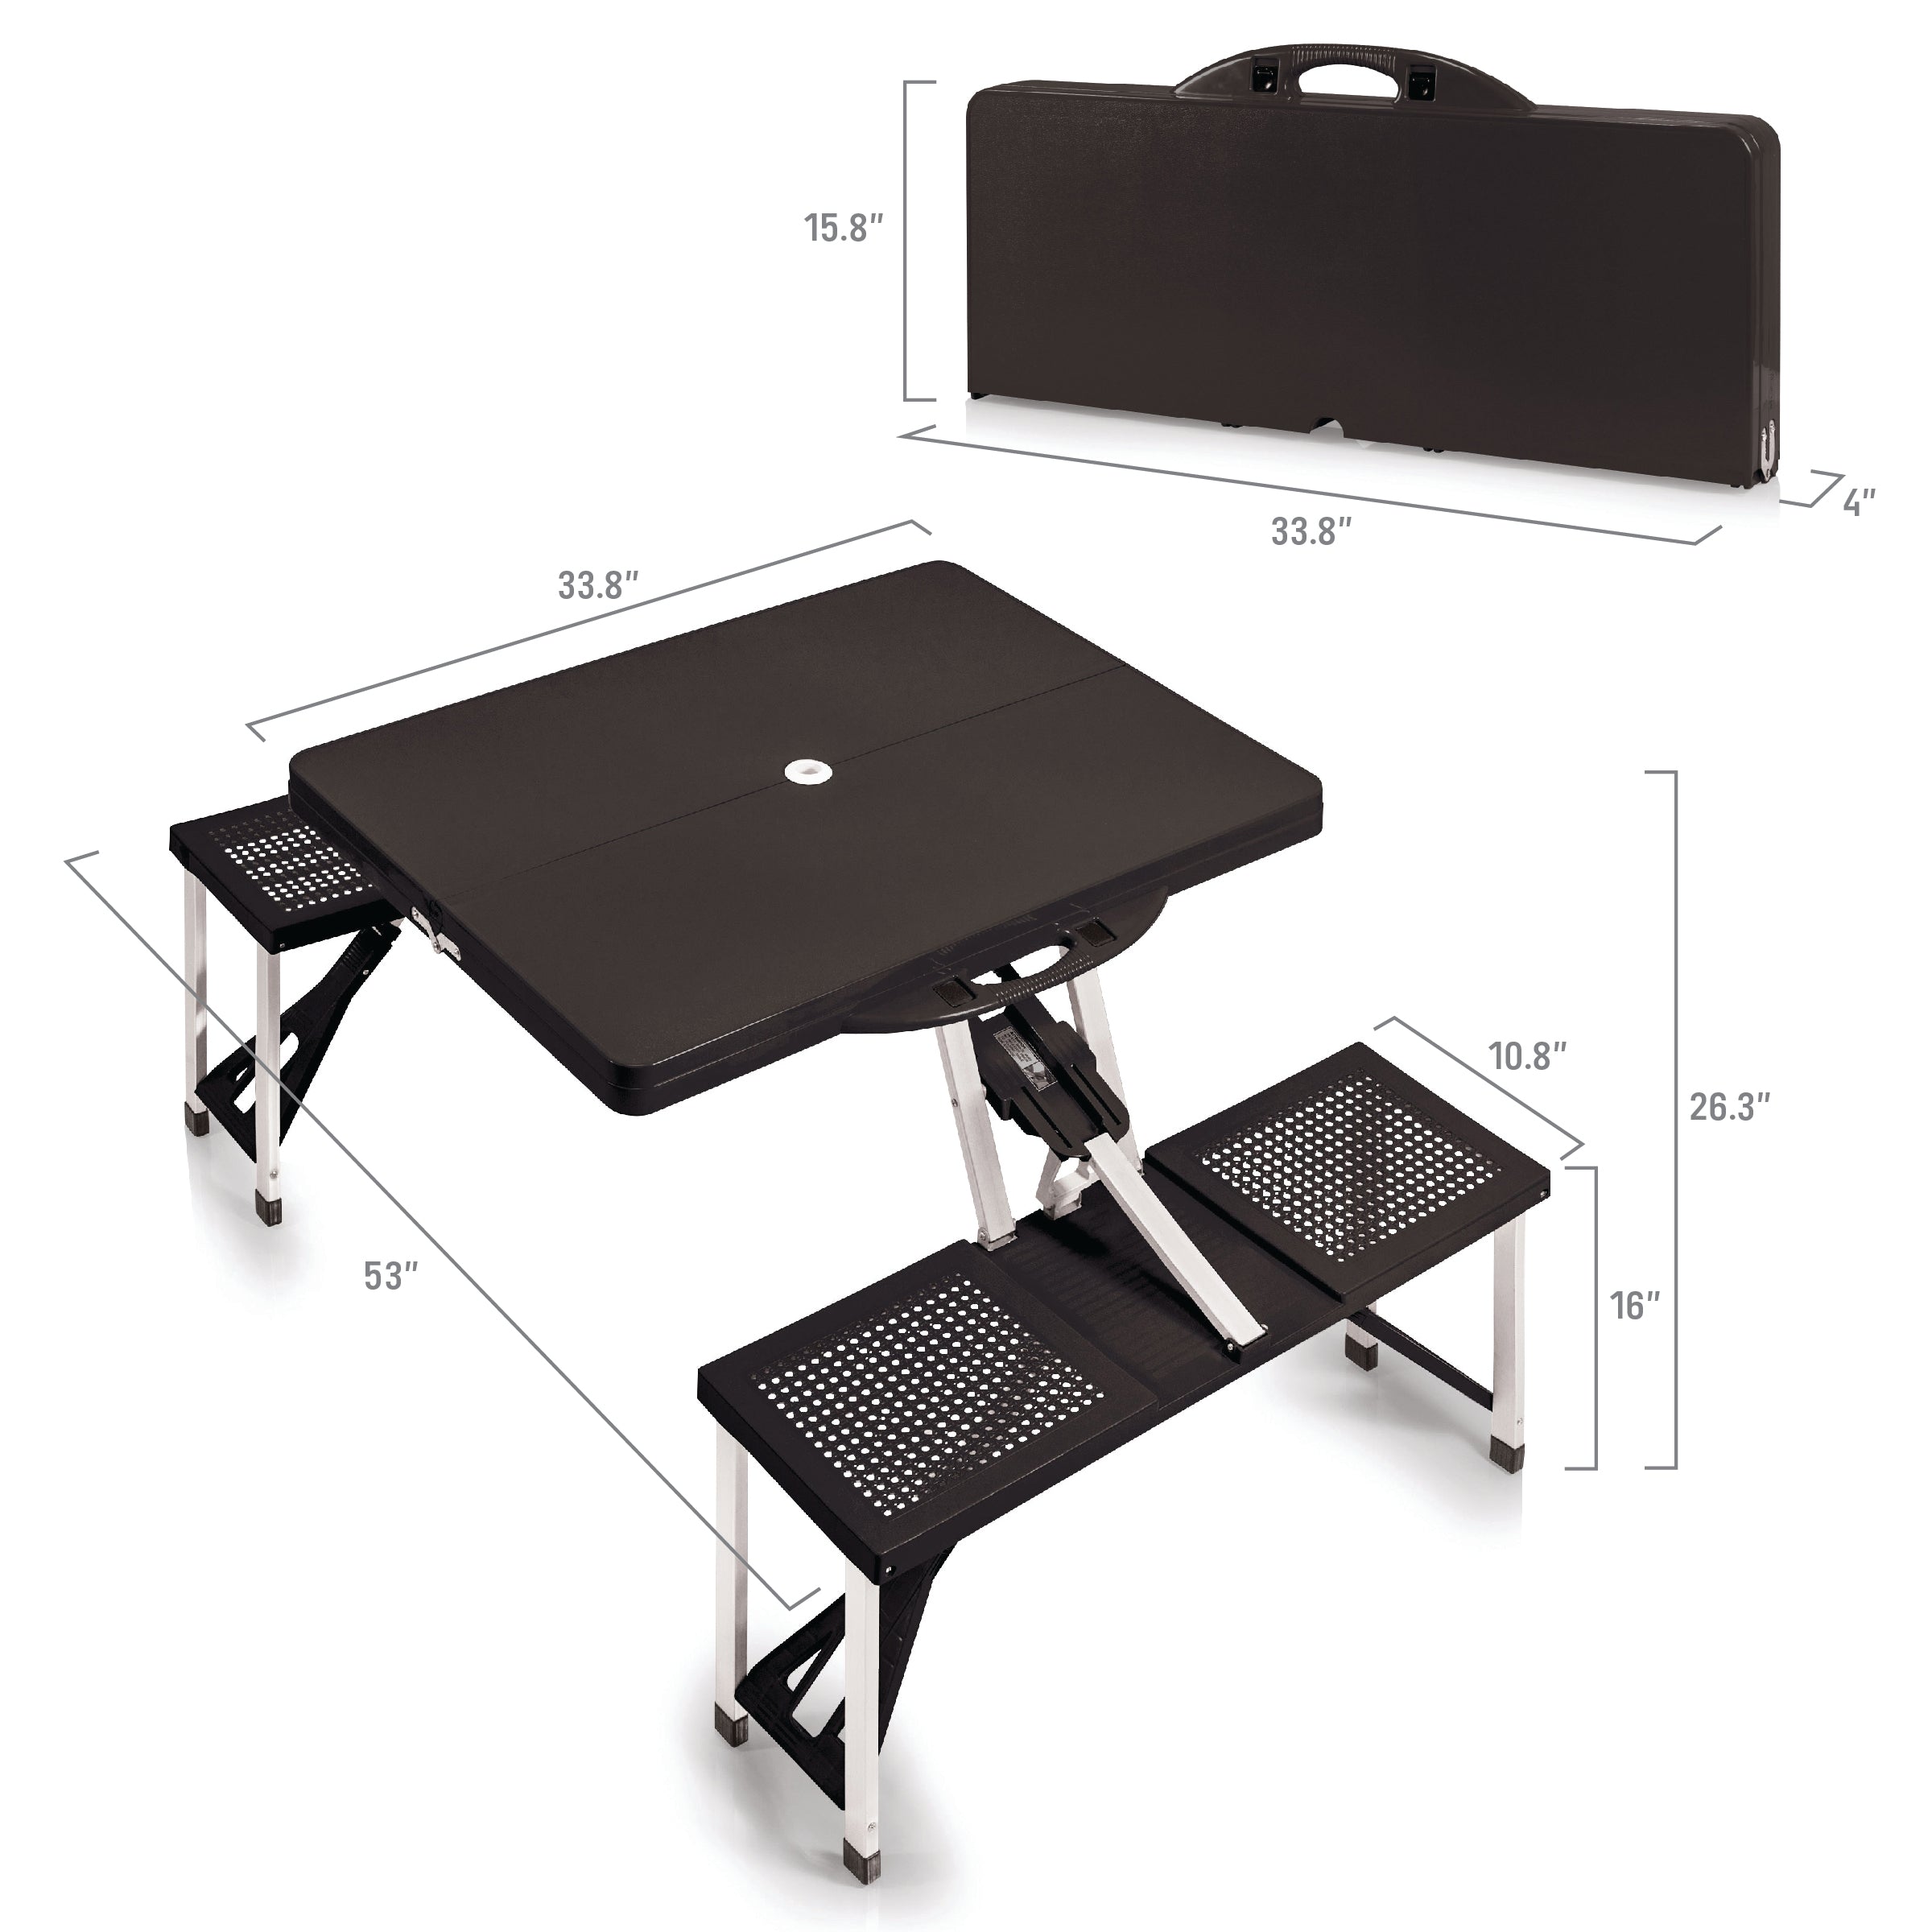 Seattle Mariners Baseball Diamond - Picnic Table Portable Folding Table with Seats